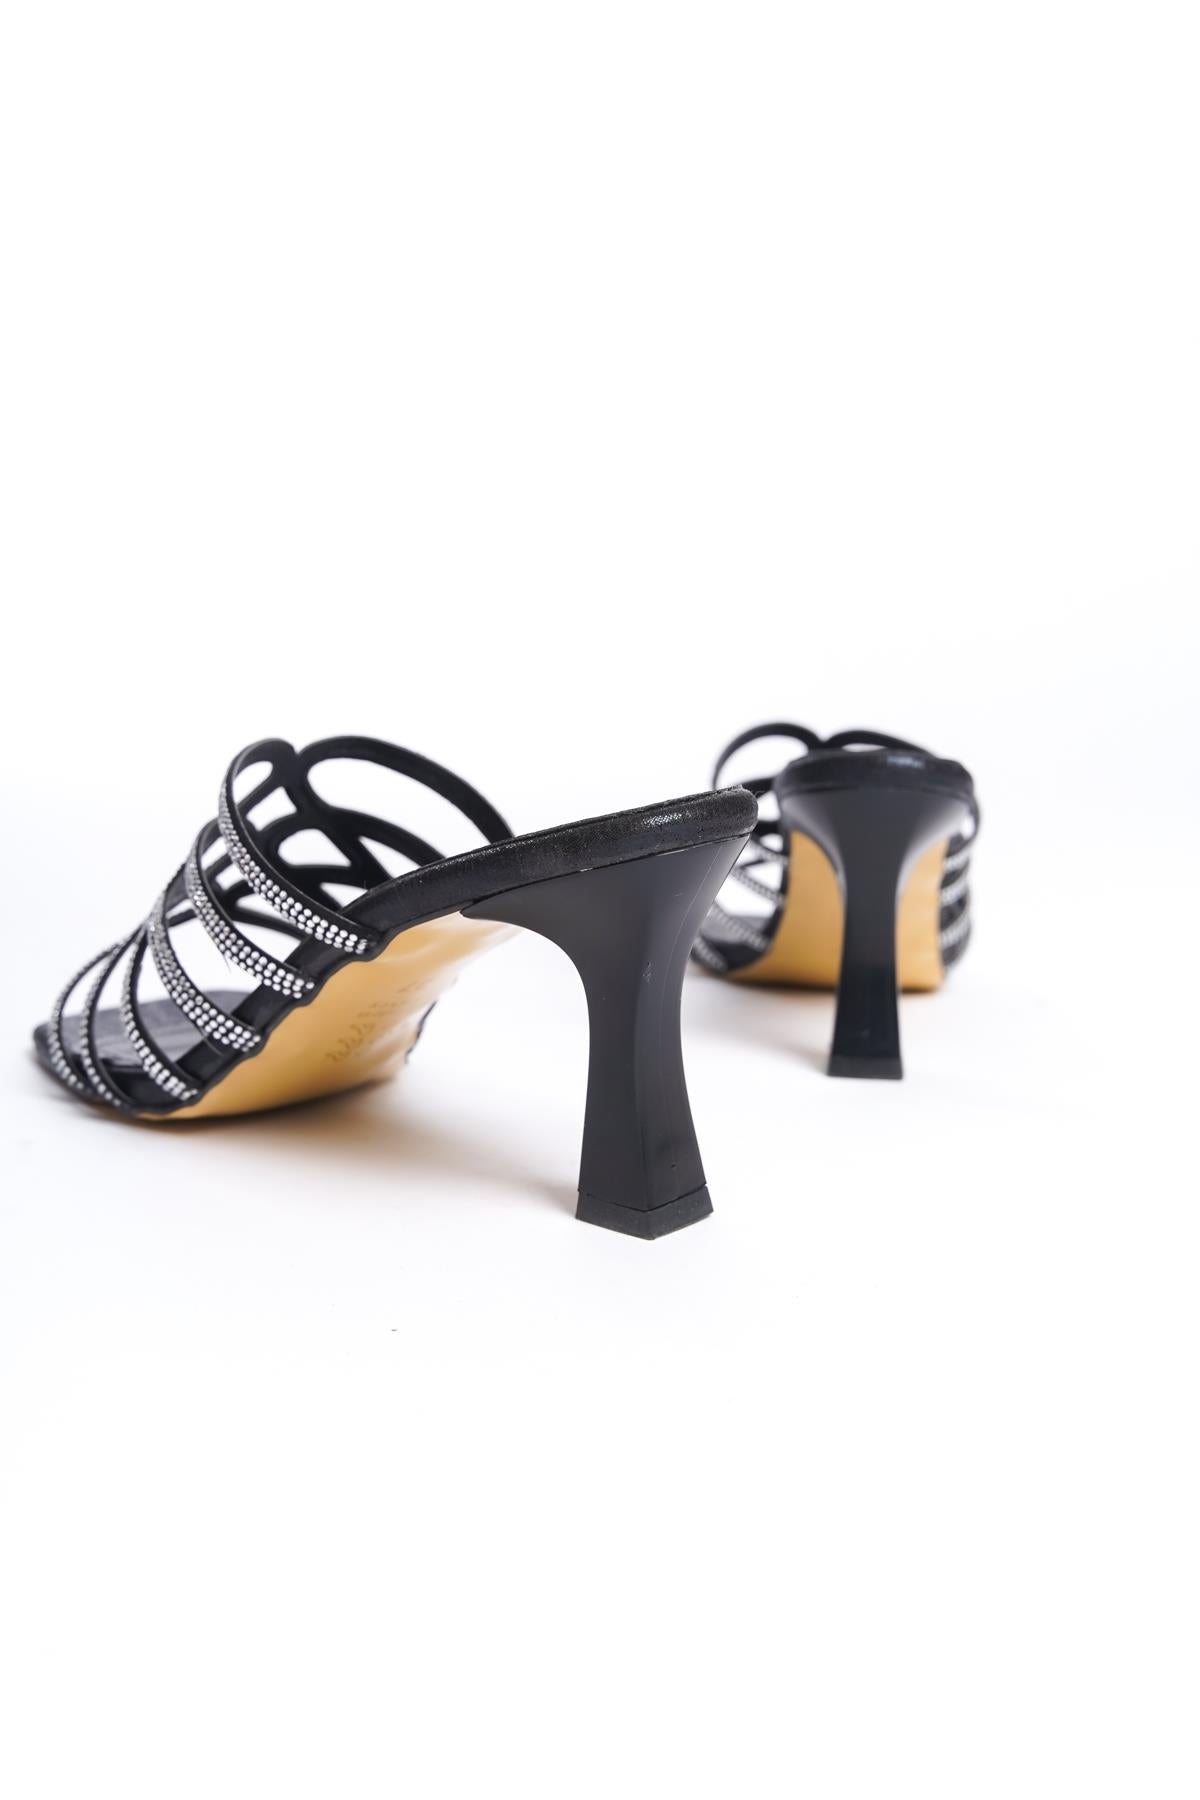 Women's Black Stone Detailed 8 cm Heel Slippers - STREETMODE ™